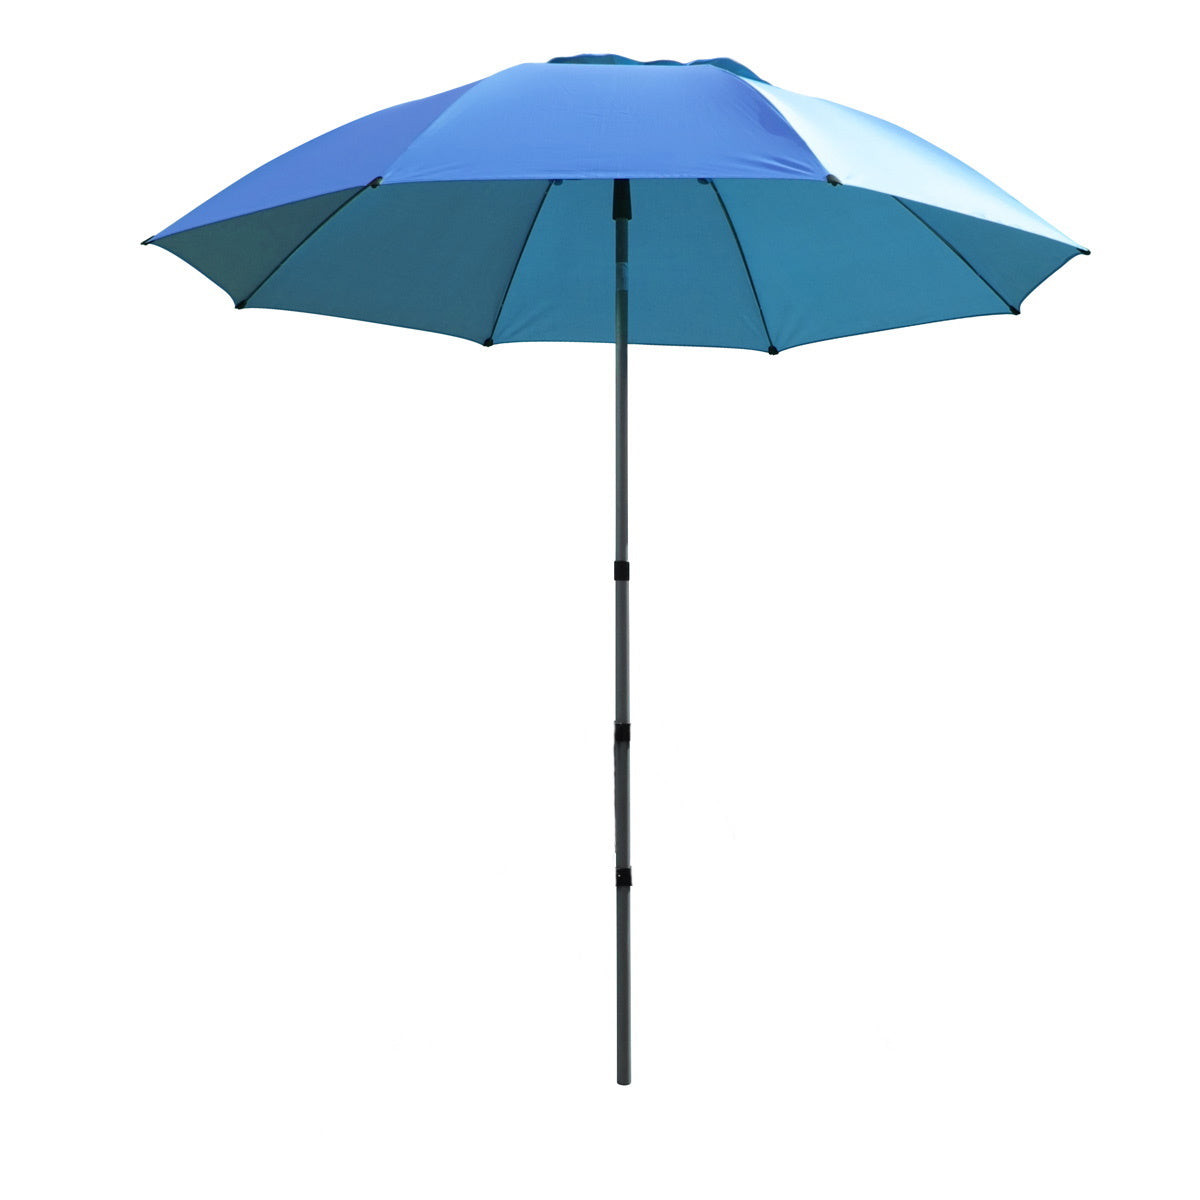 Revco Black Stallion Blue FR Industrial Umbrella w/out Stand (UB200-BLU)